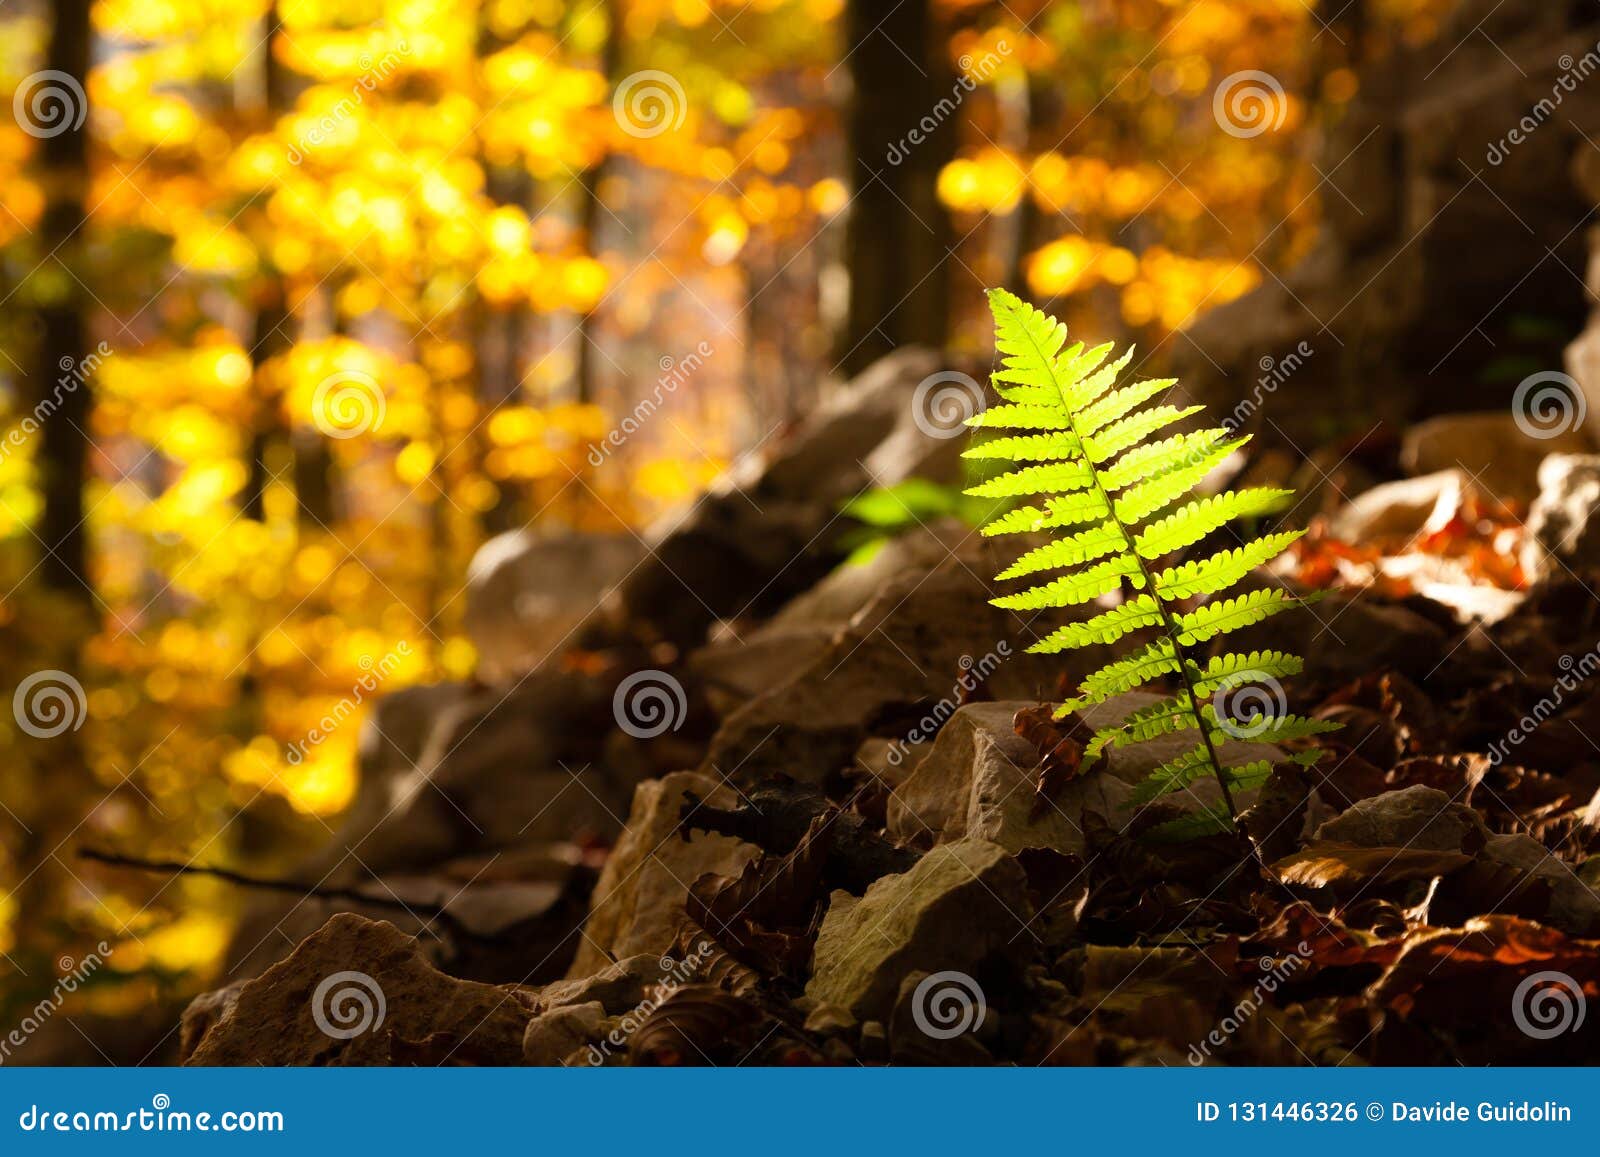 fern leaf close up, autumn background. autumn lansdscape